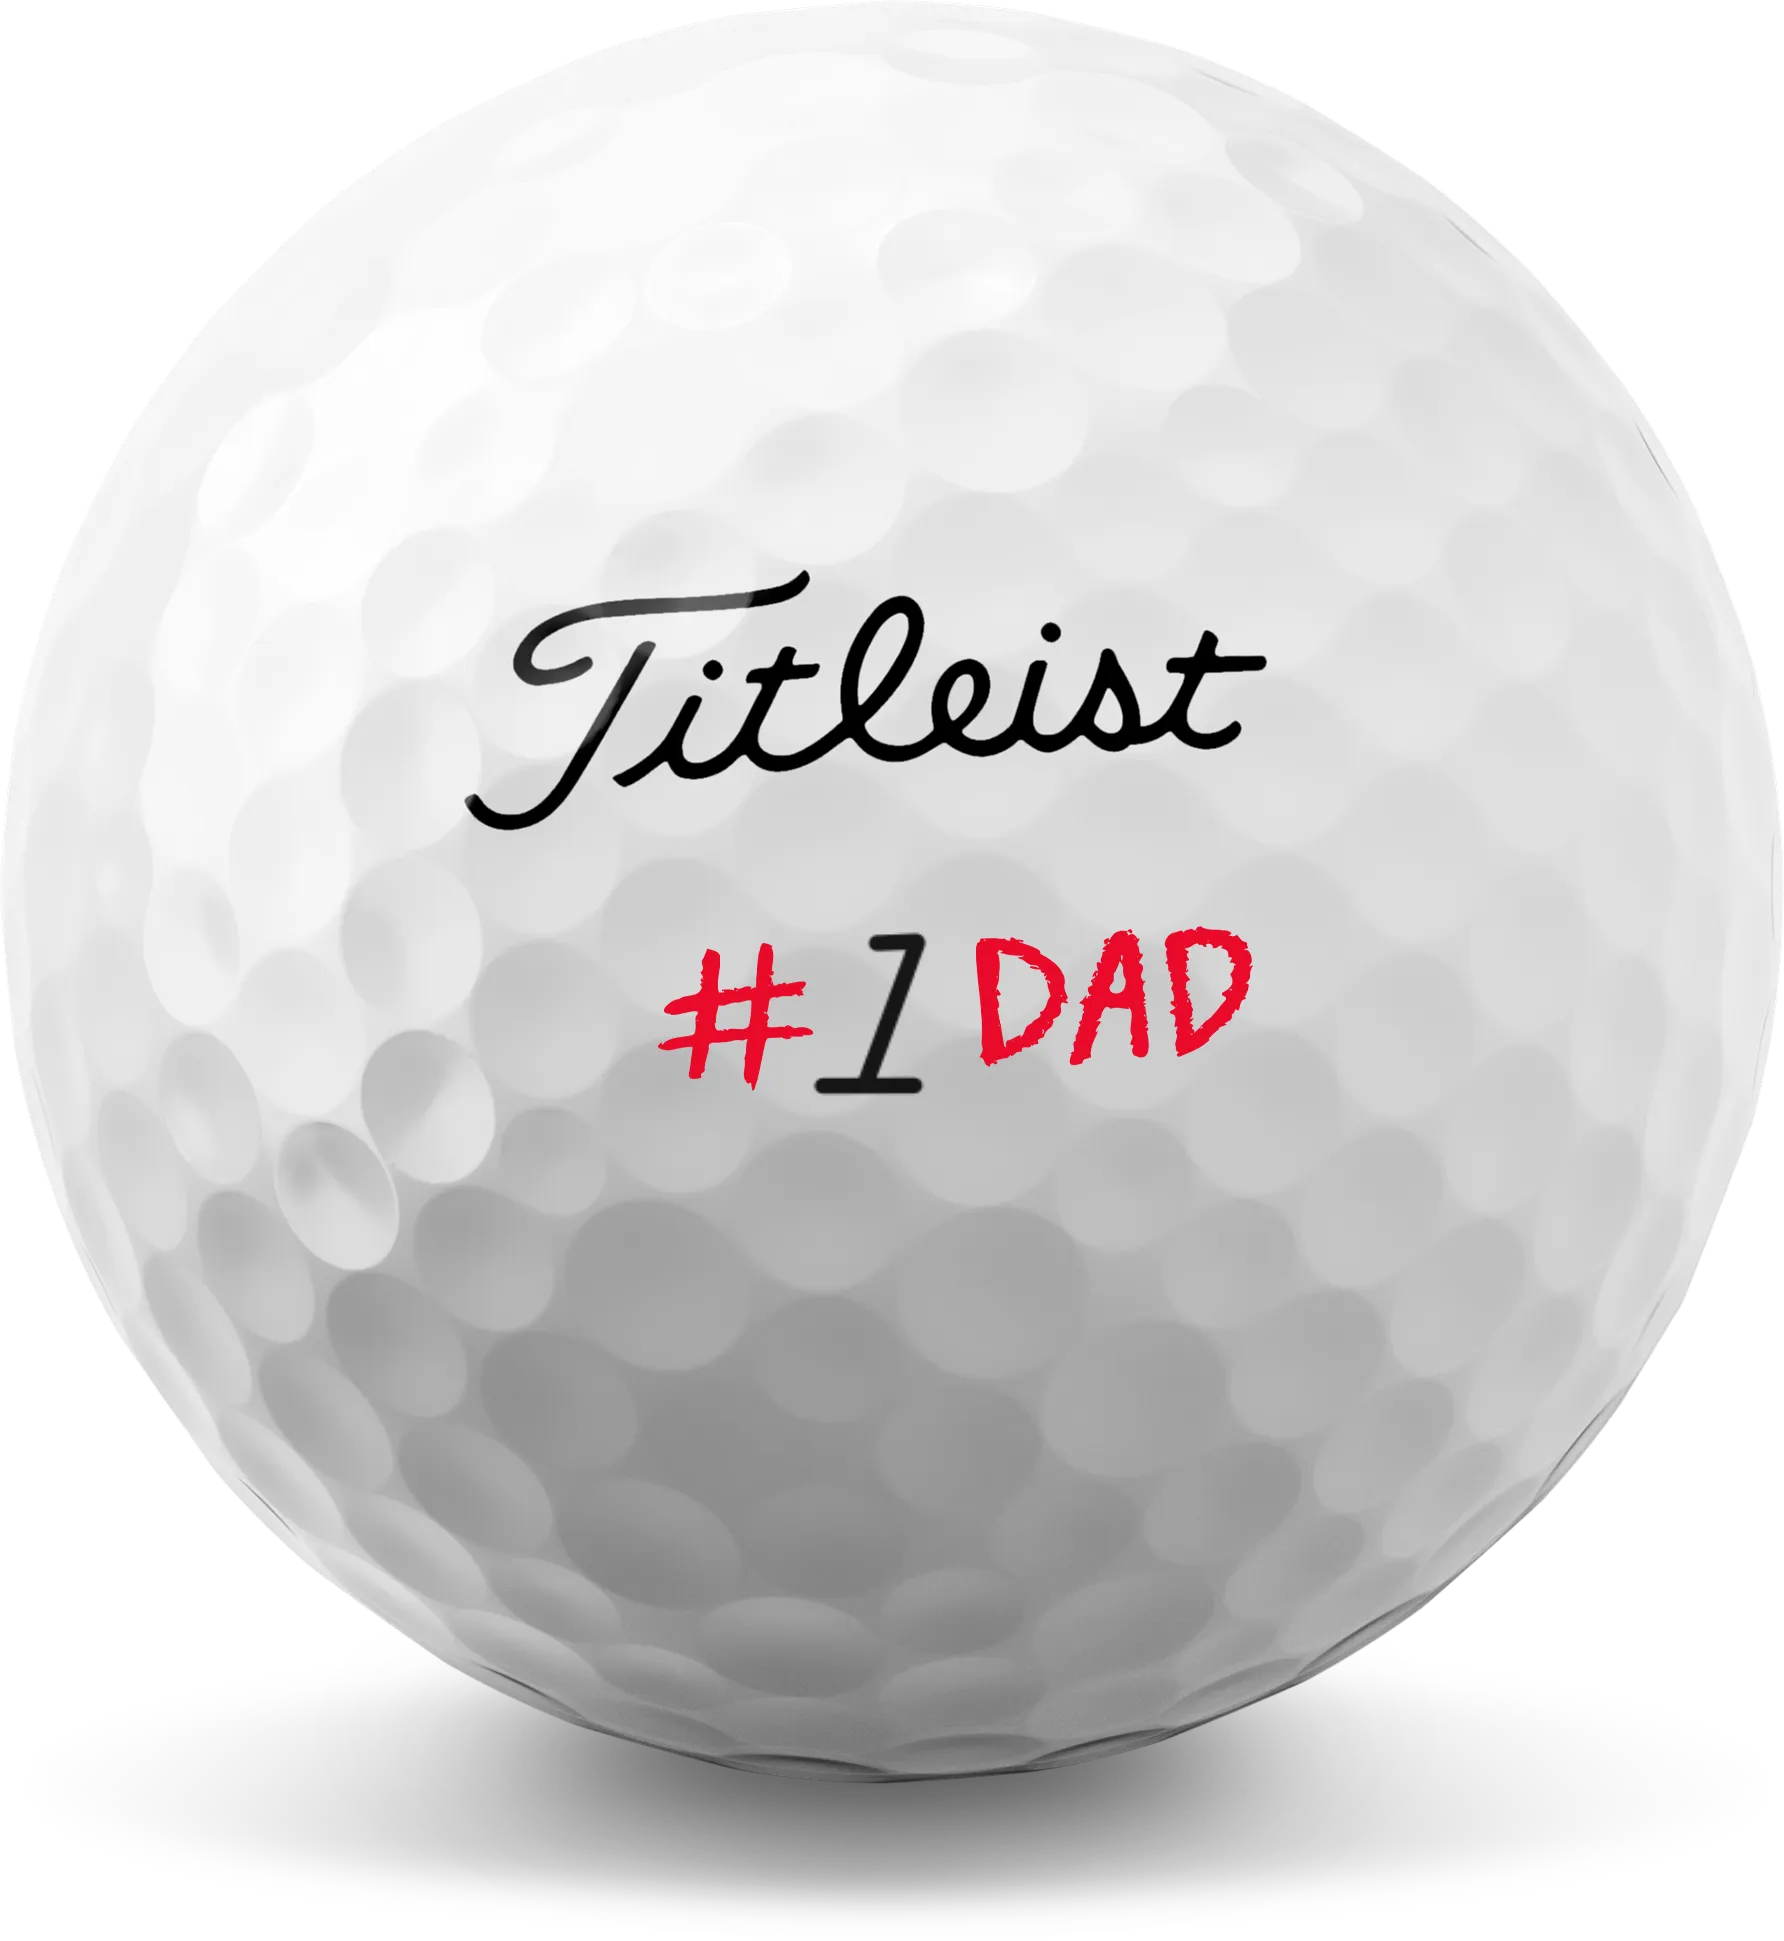 Titleist Pro V1 #1 Dad Limited Edition Golfbälle, weiß